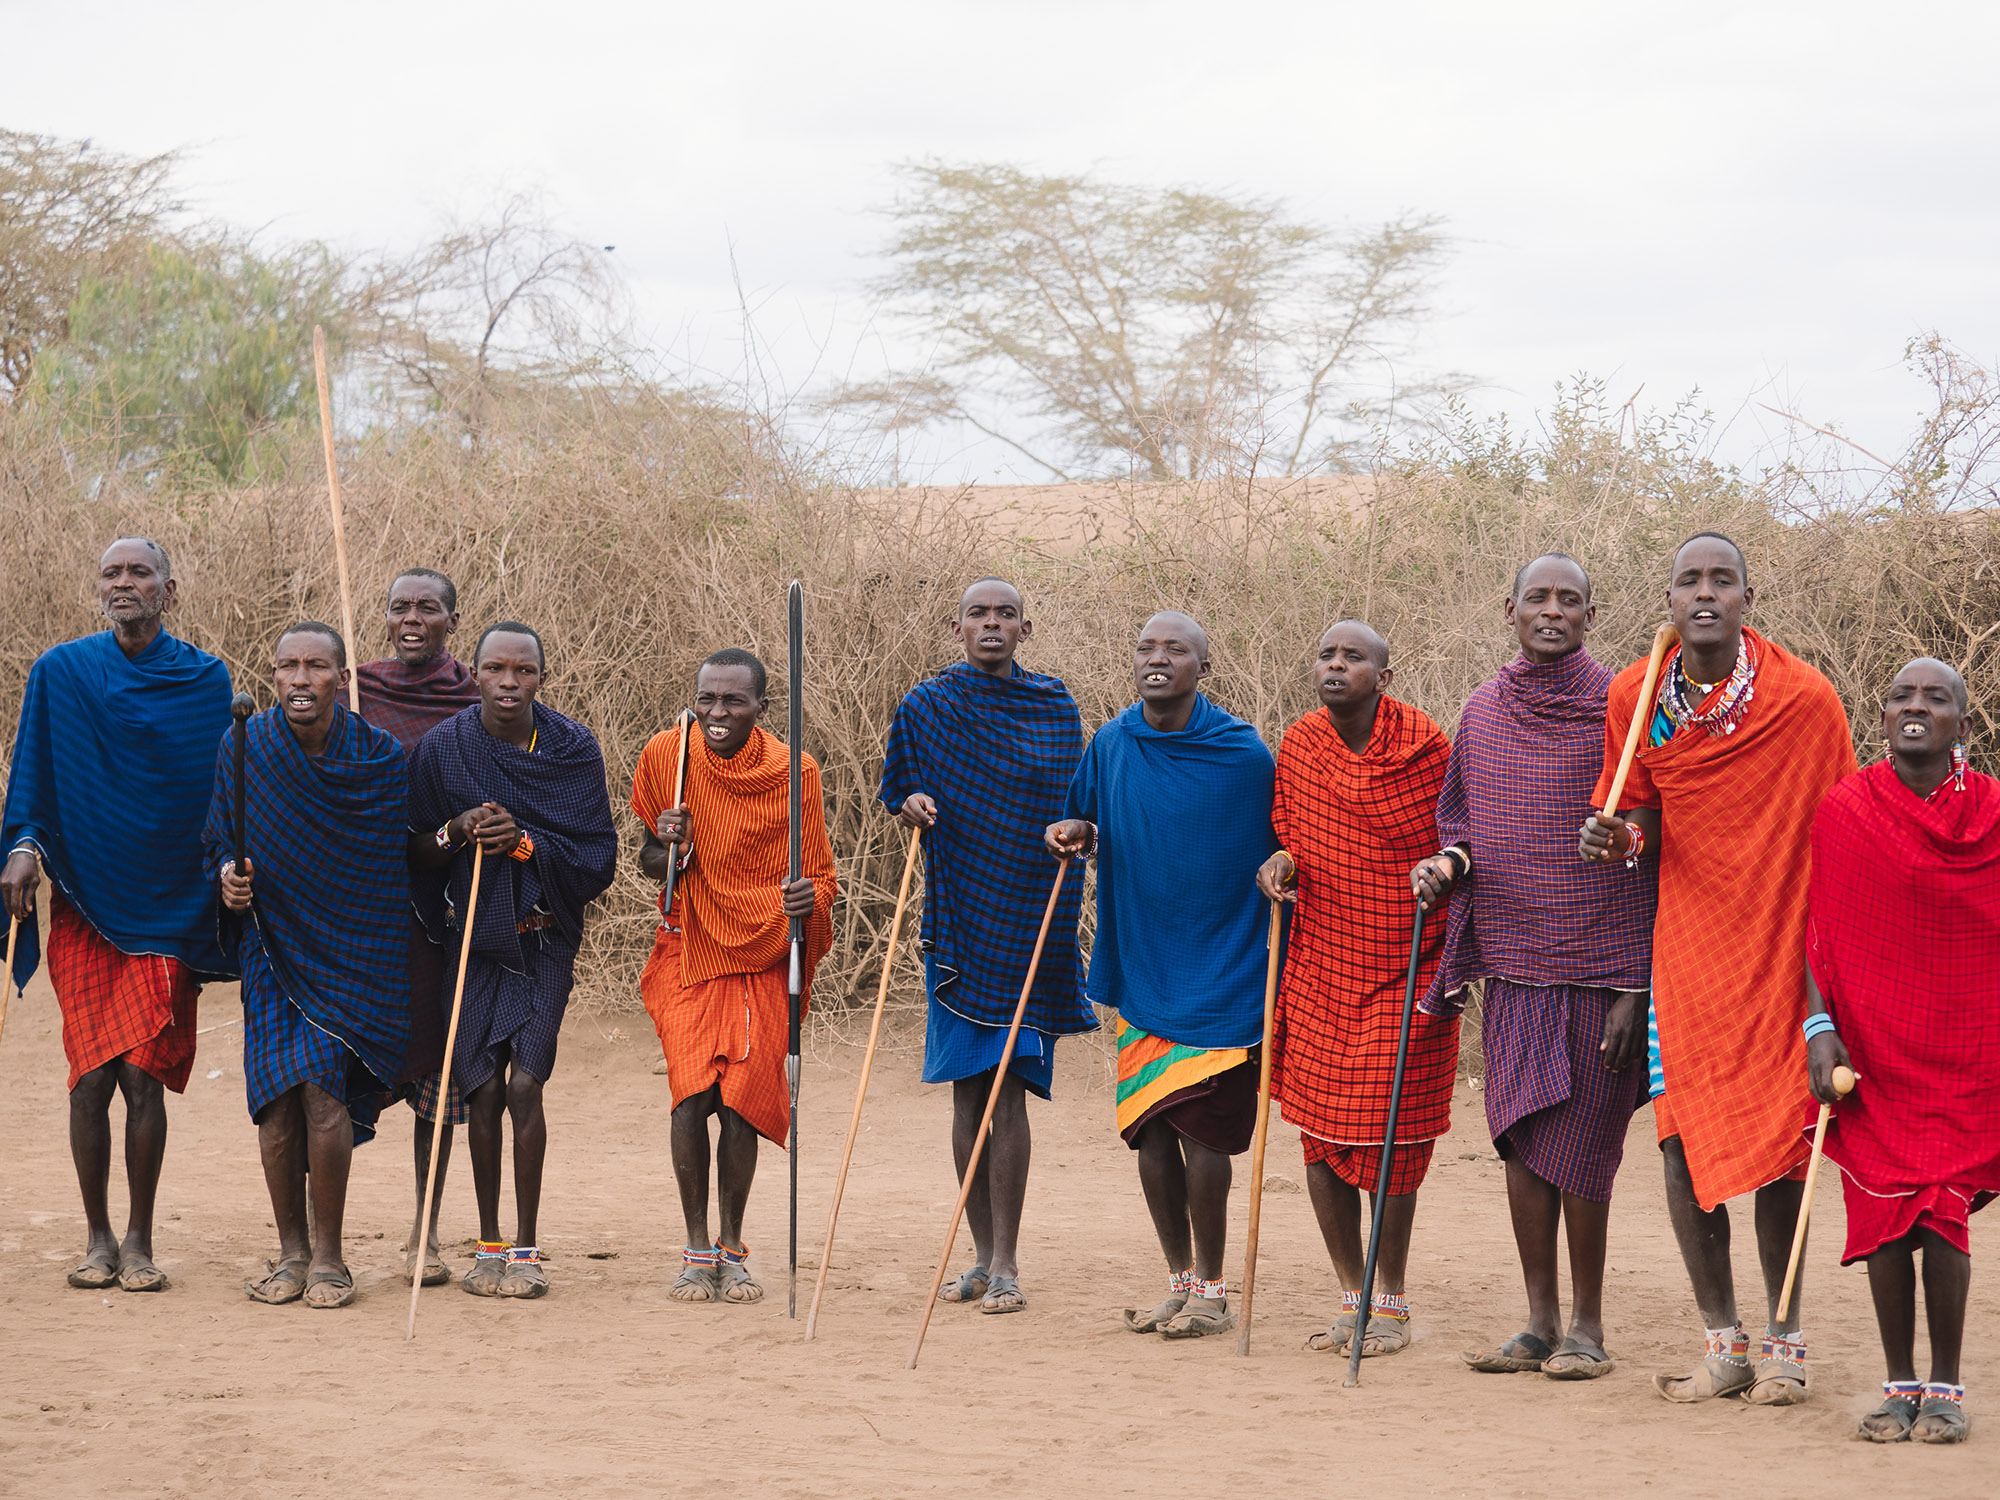 Group of people in Kenya. Photo by Kirsten Alana.